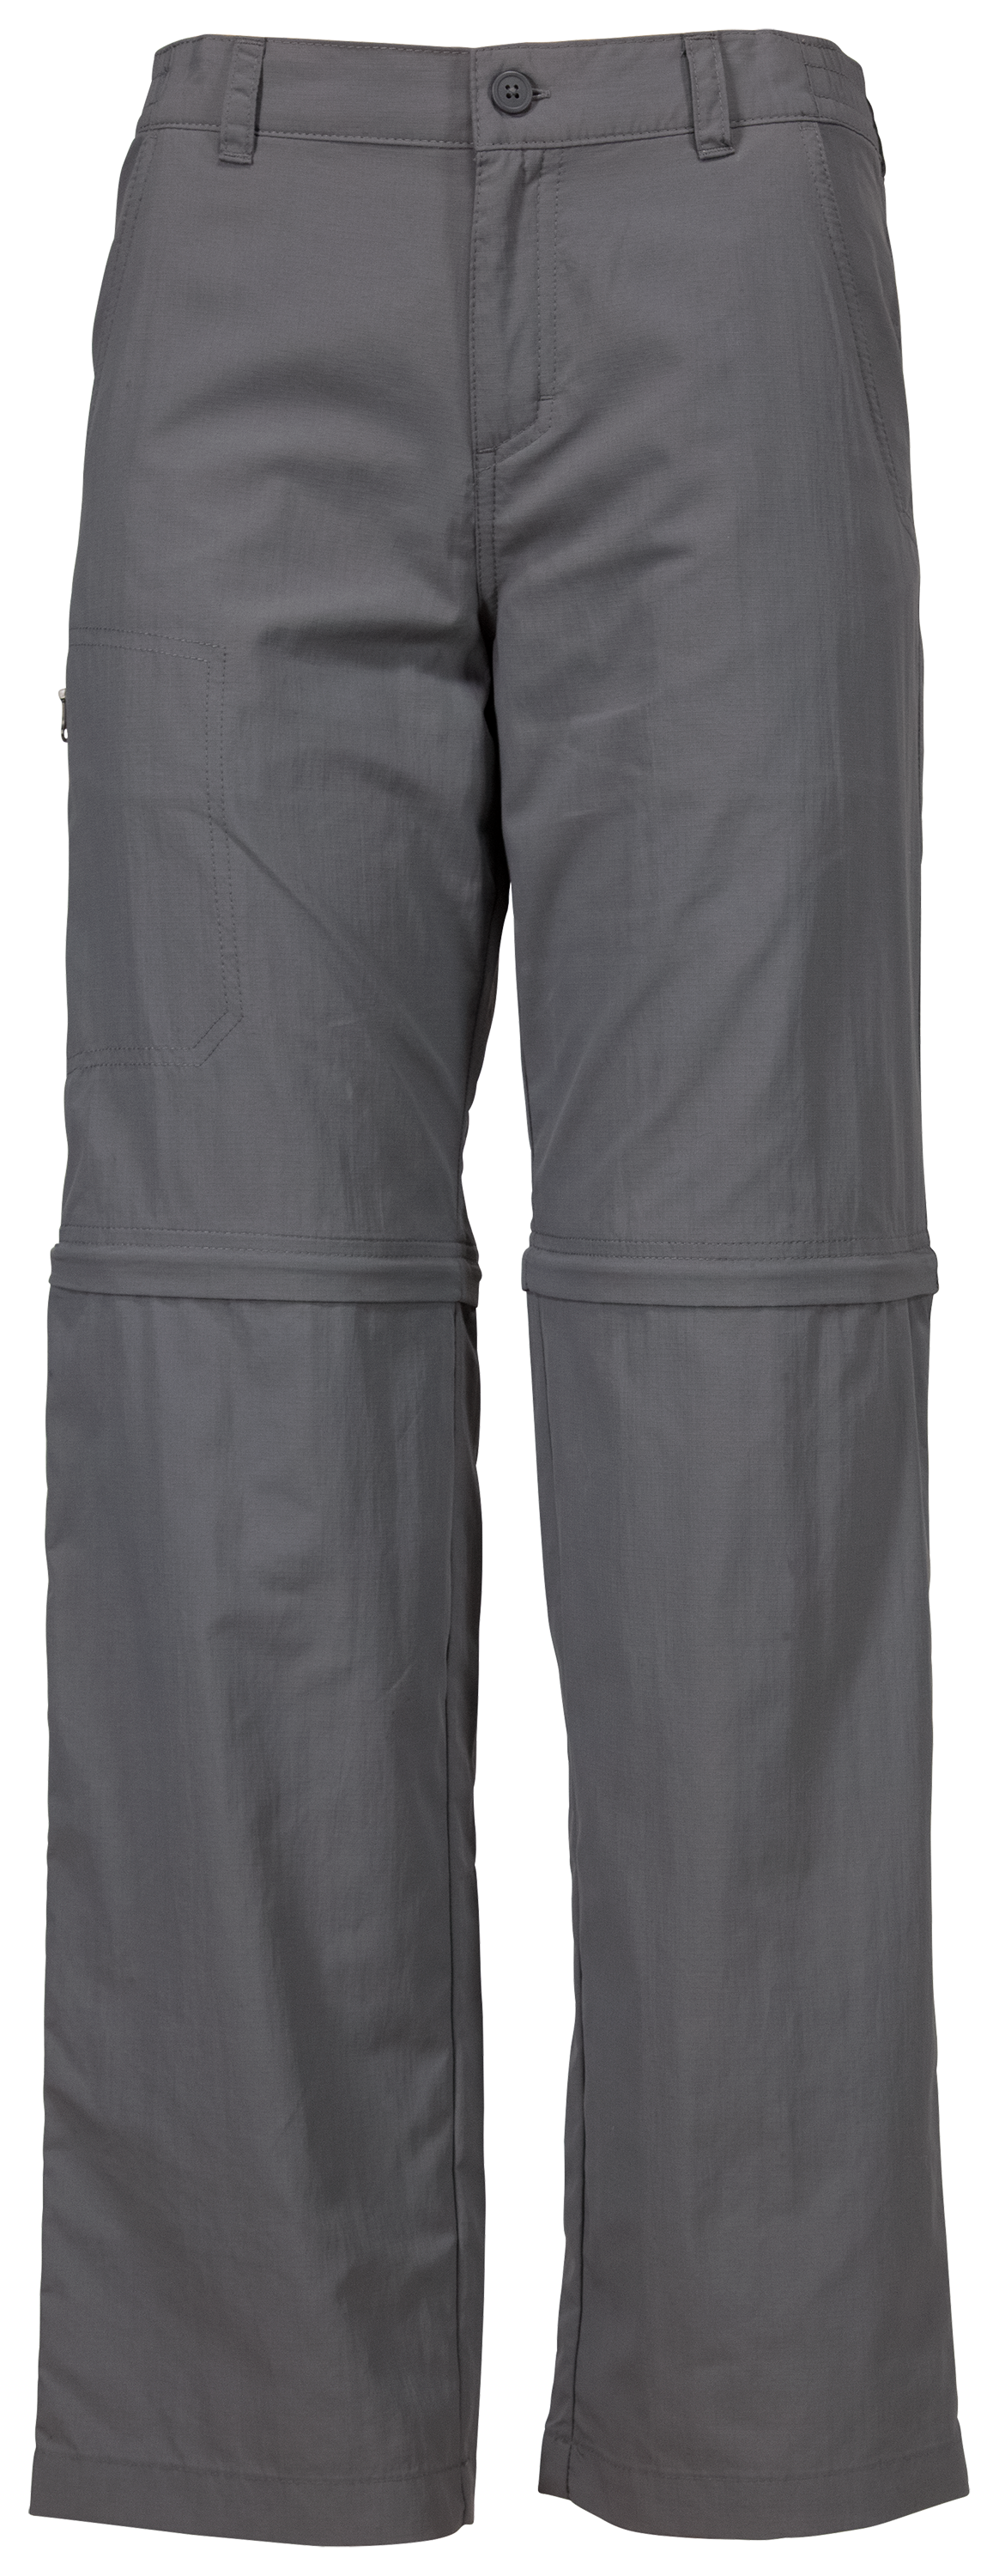 Columbia Silver Ridge IV Convertible Pants for Boys - City Grey - XL